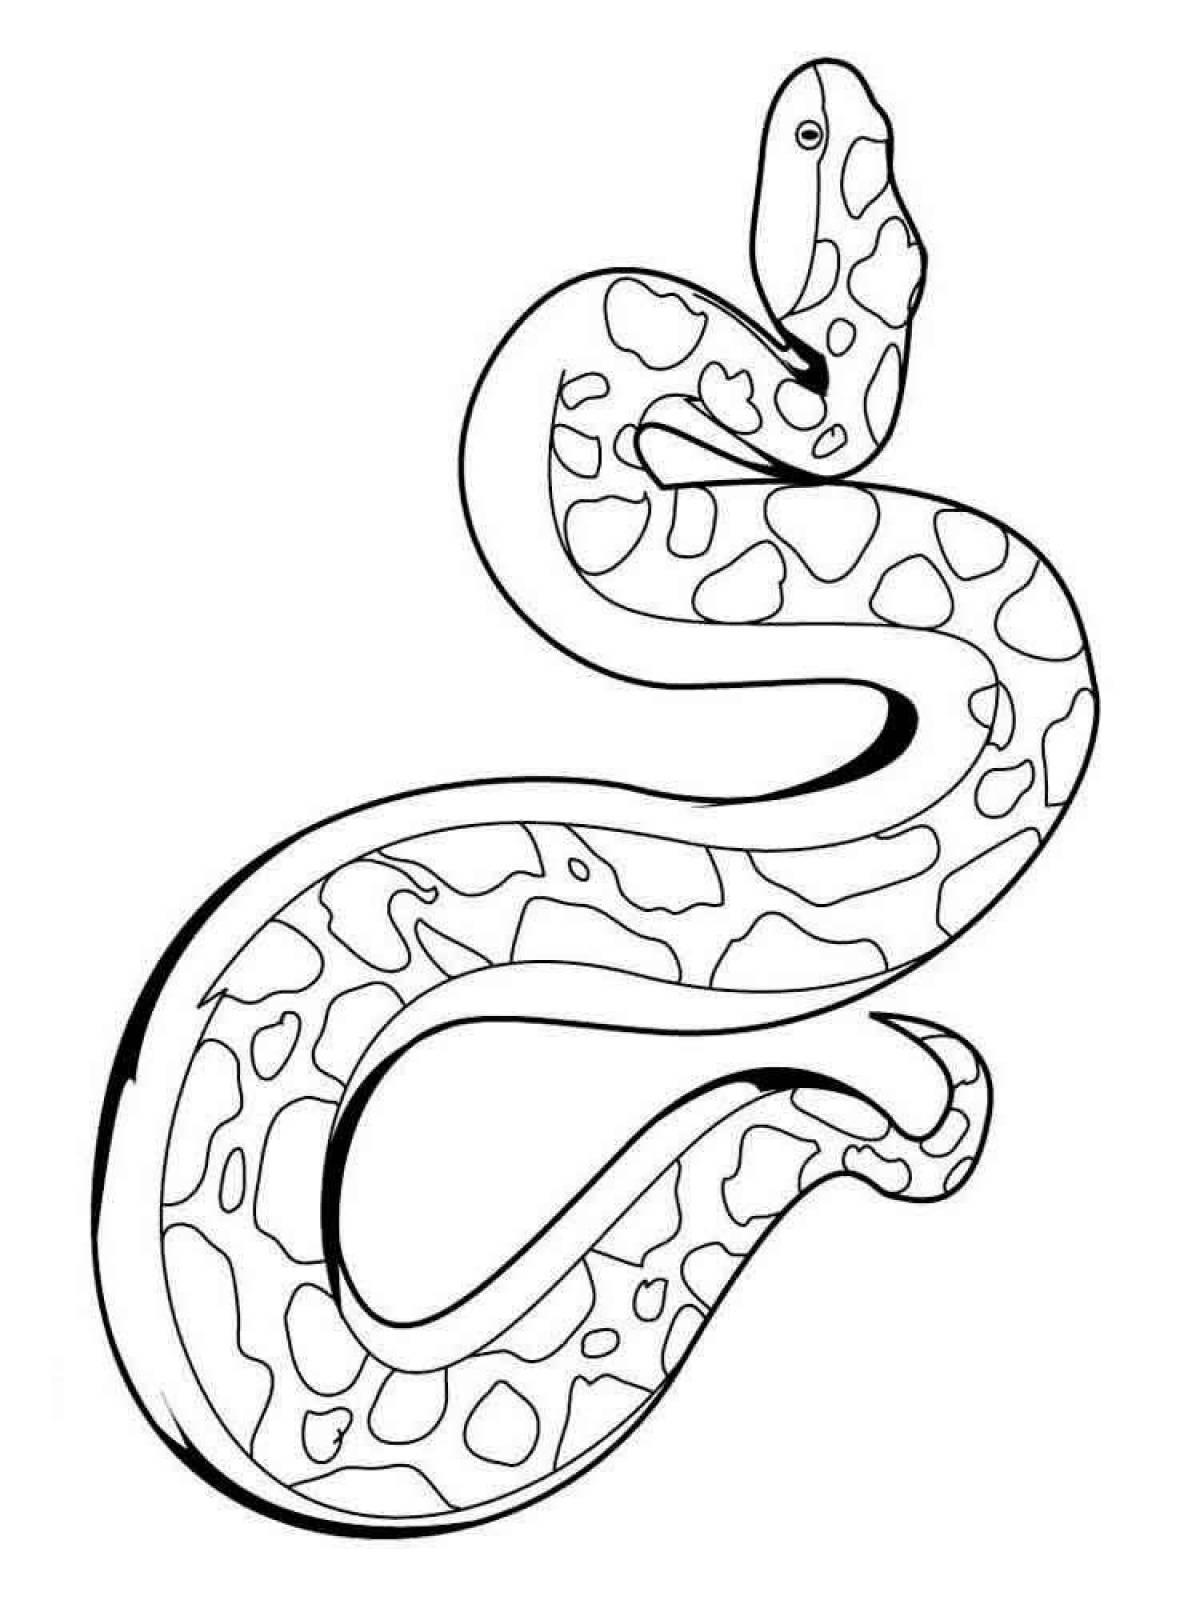 Sliding snake coloring